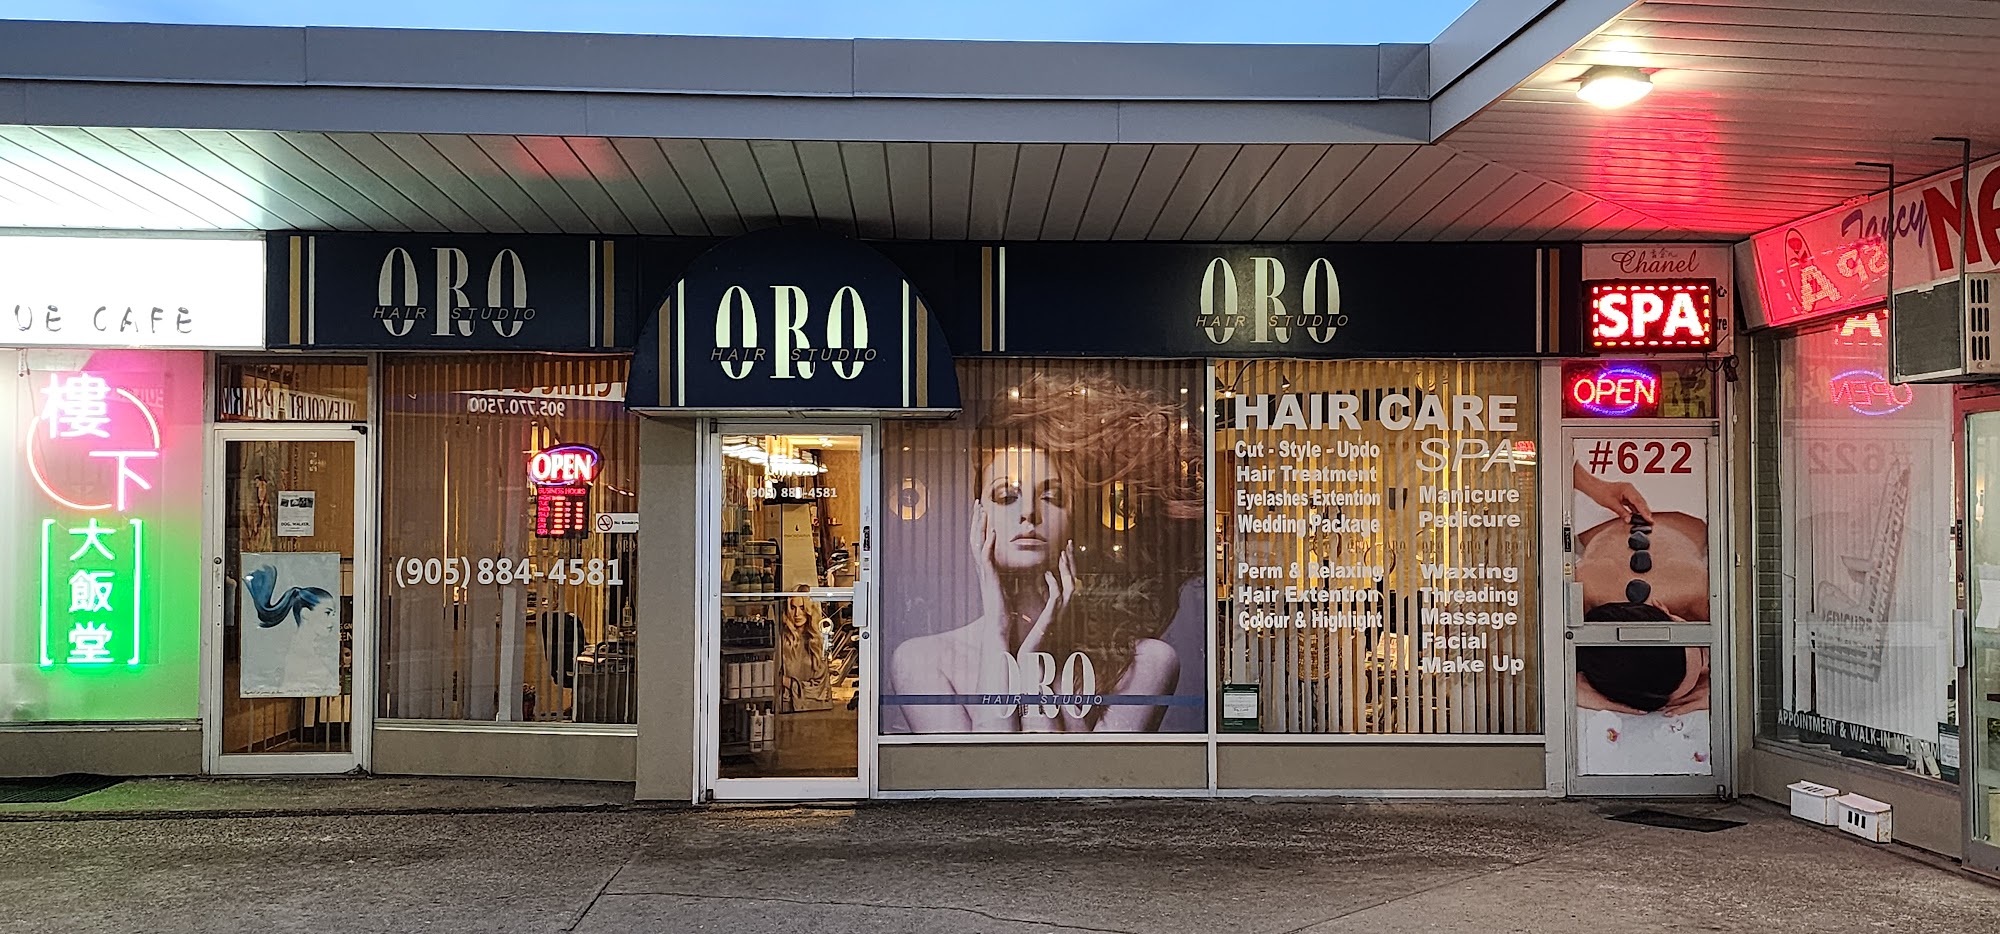 Oro Hair Studio